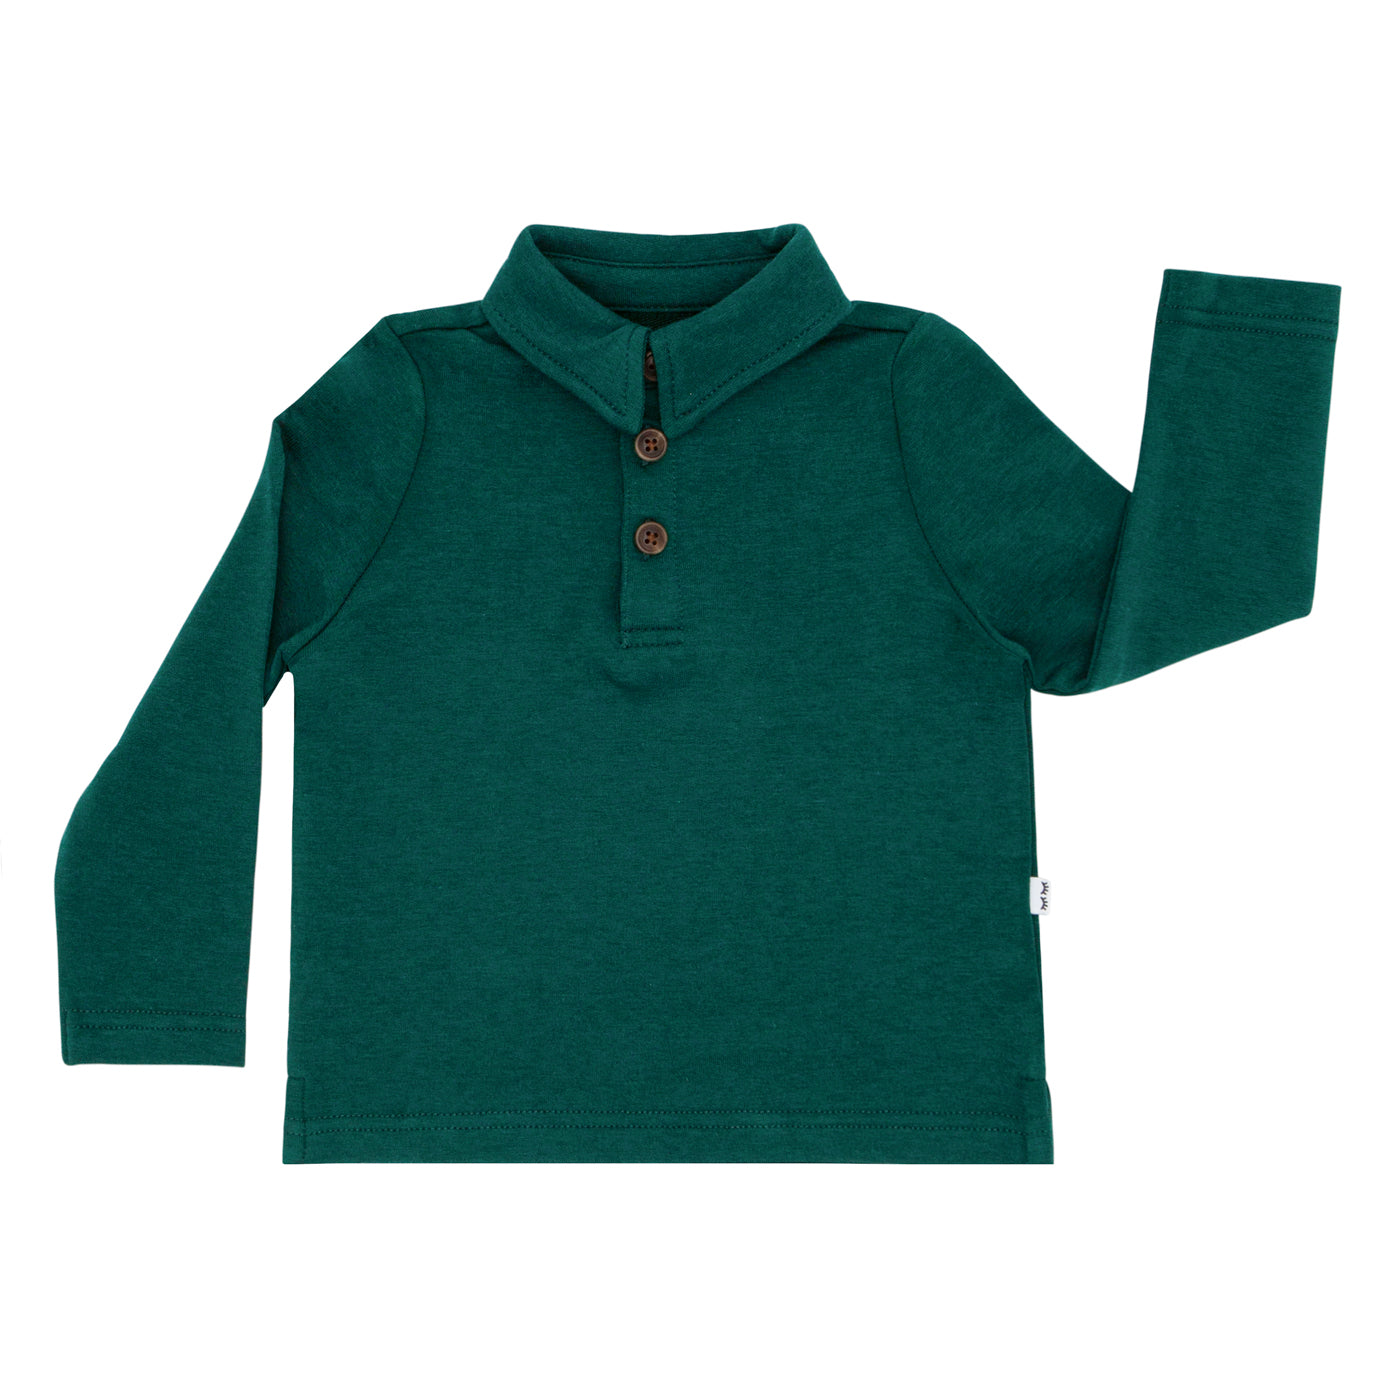 Flat lay image of an Emerald polo shirt